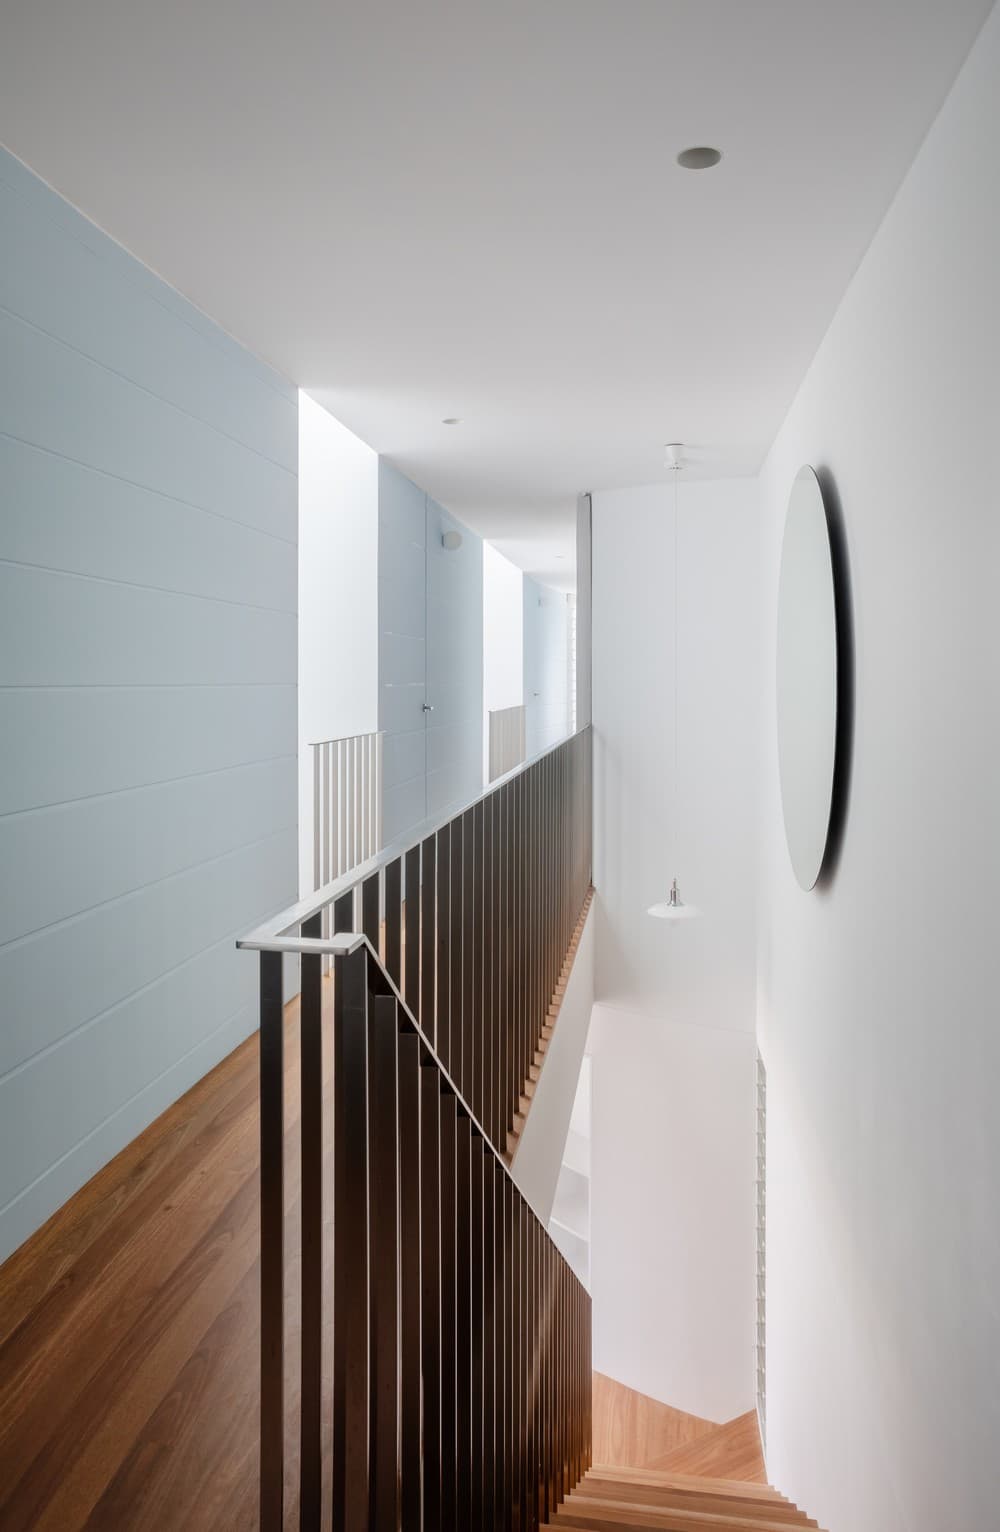 stairs / Benn + Penna Architecture